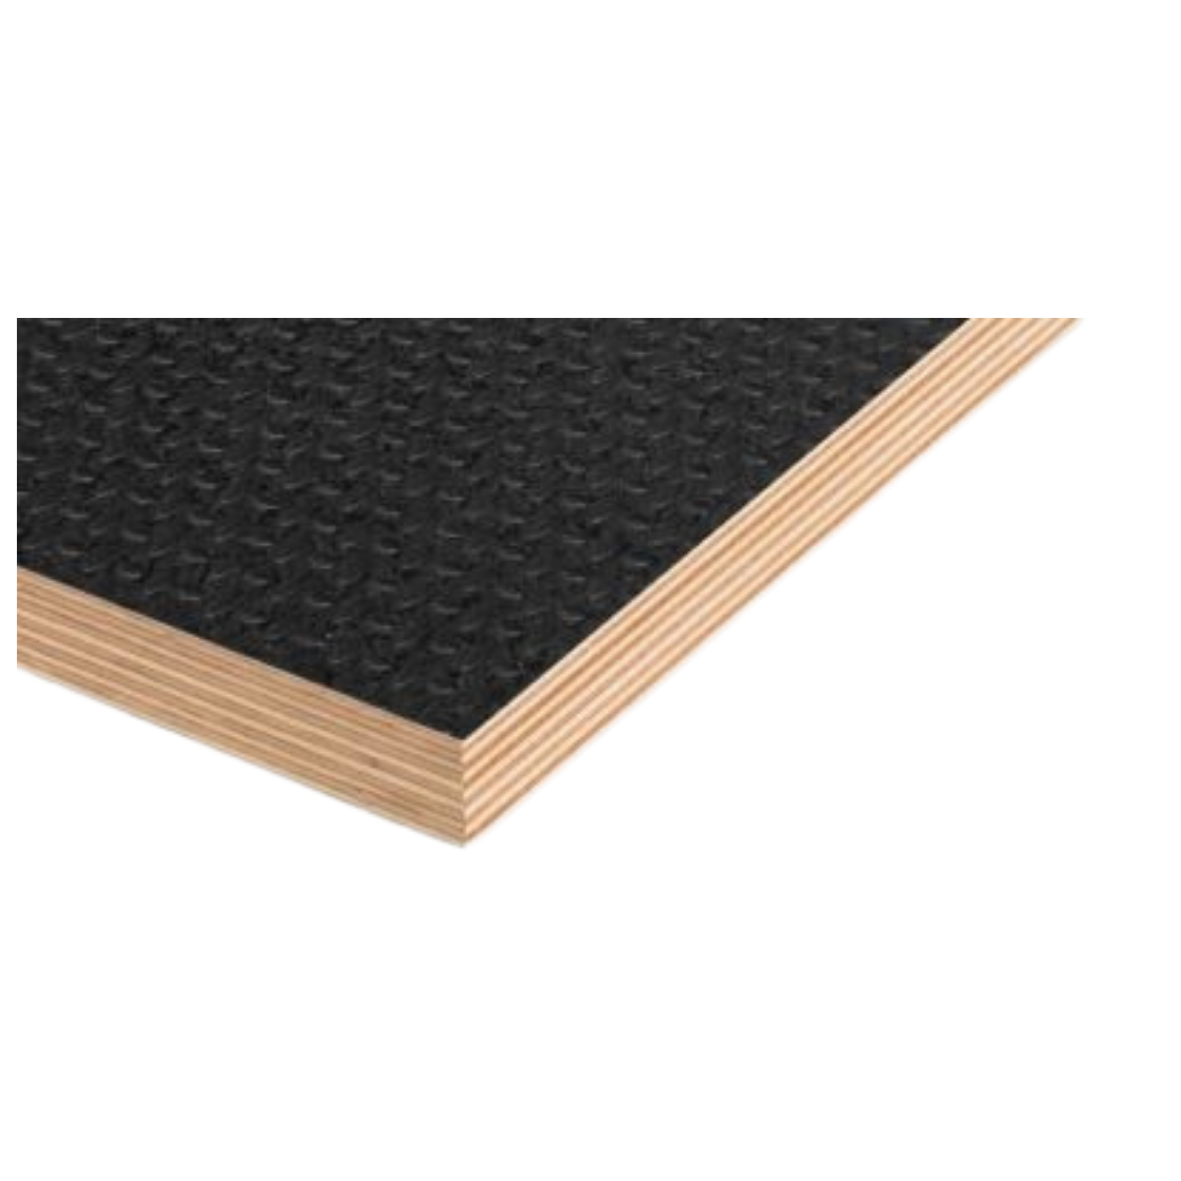 Antiskid playwood - Anti-slip TEGO formwork plywood 18 mm thickness, 1250 x 2500 mm, https:maxbau.ro